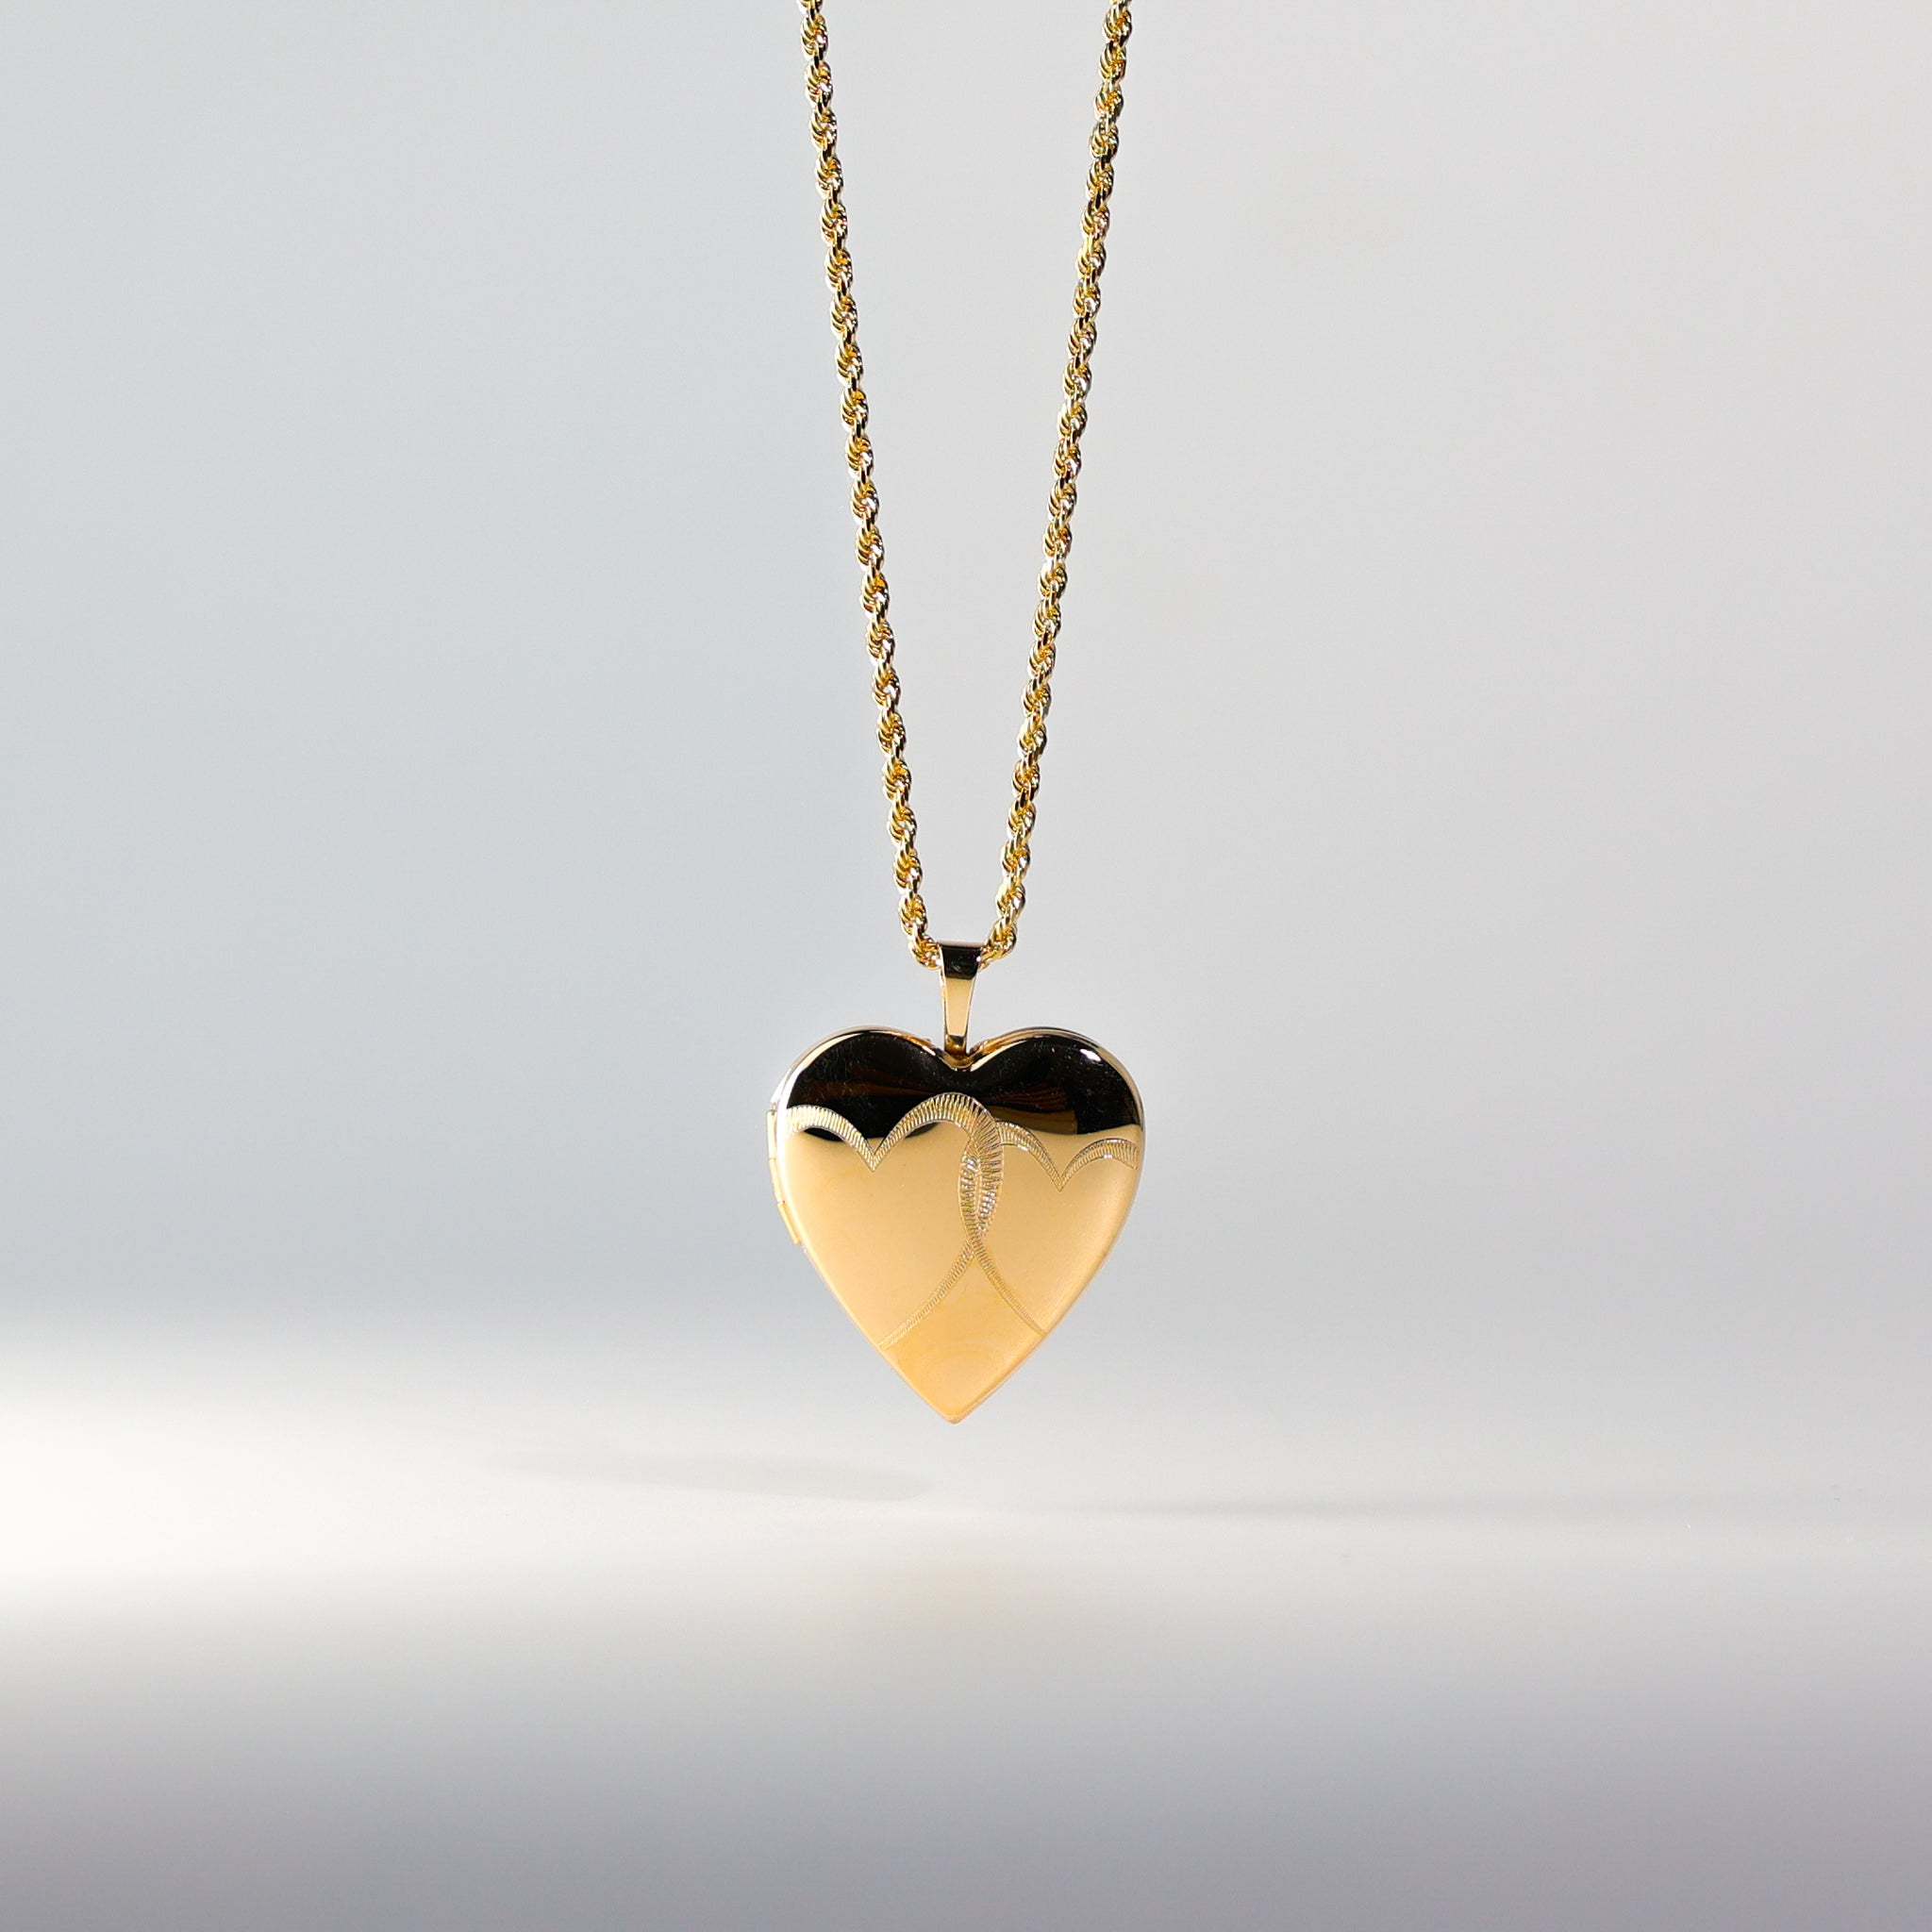 Gold Heart Locket Pendant Model-PT0621 - Charlie & Co. Jewelry